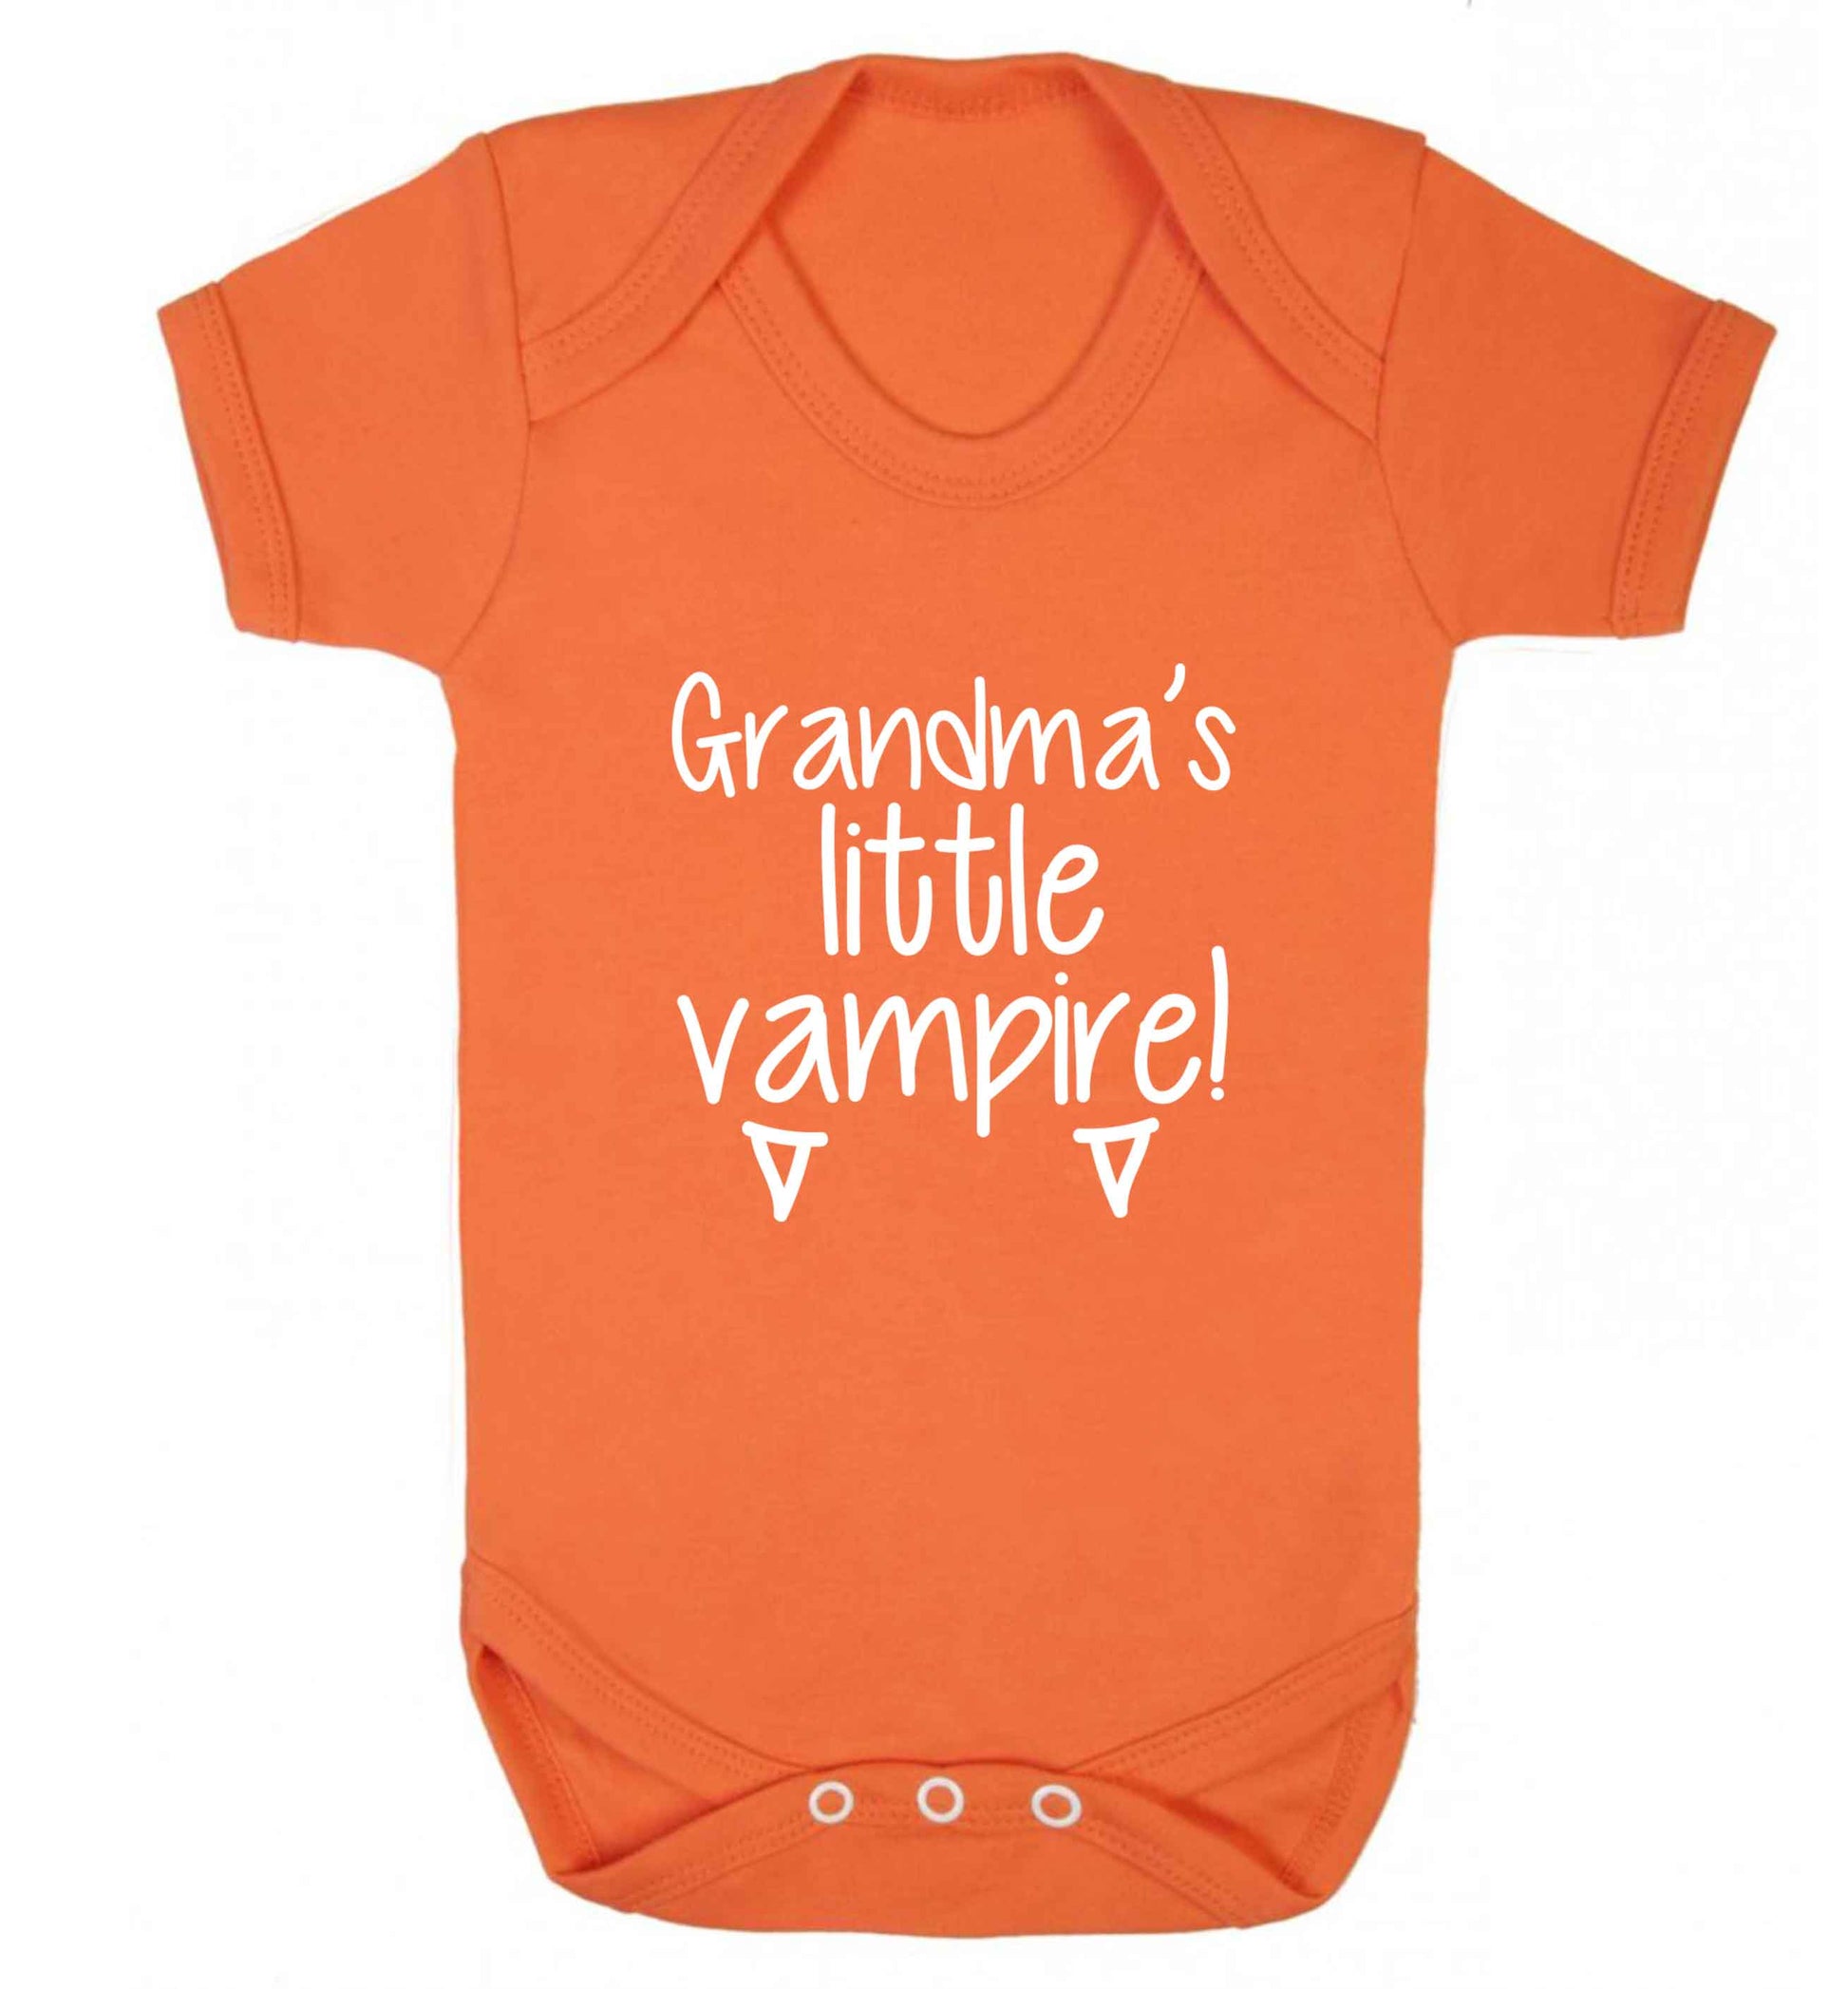 Grandma's little vampire baby vest orange 18-24 months